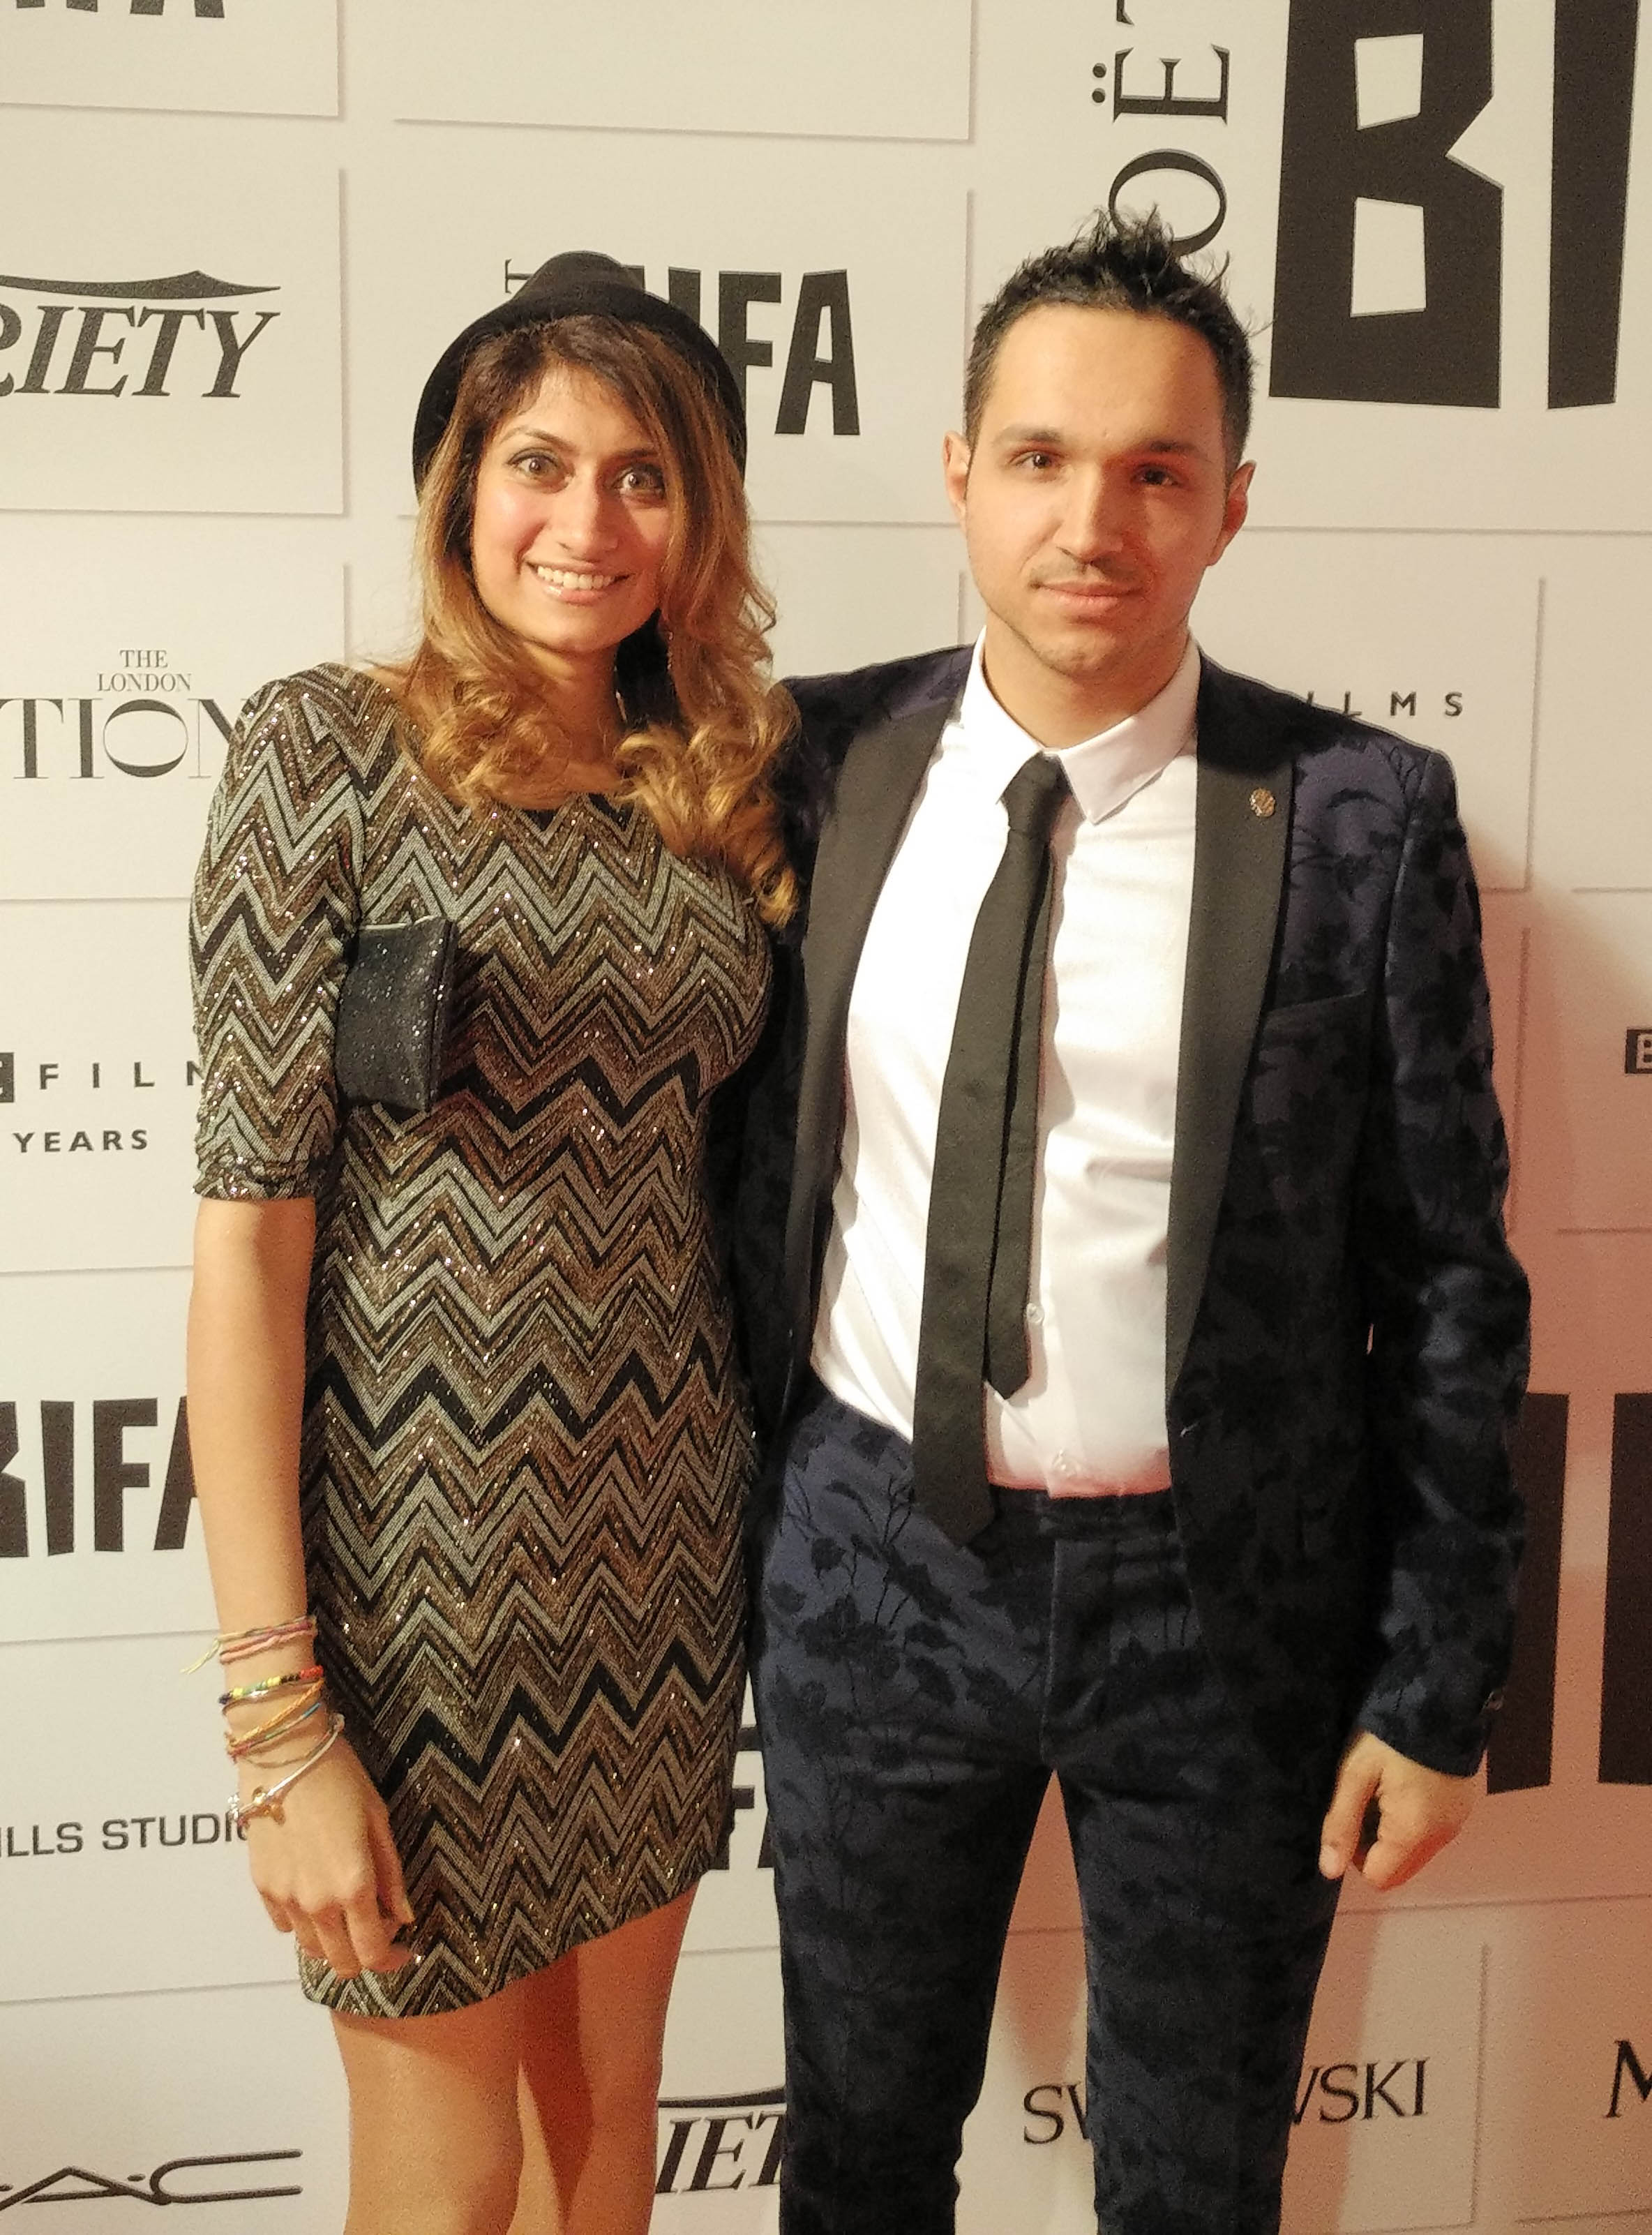 Adam Patel with Maaya Modha at the British Independent Film Awards 2015.